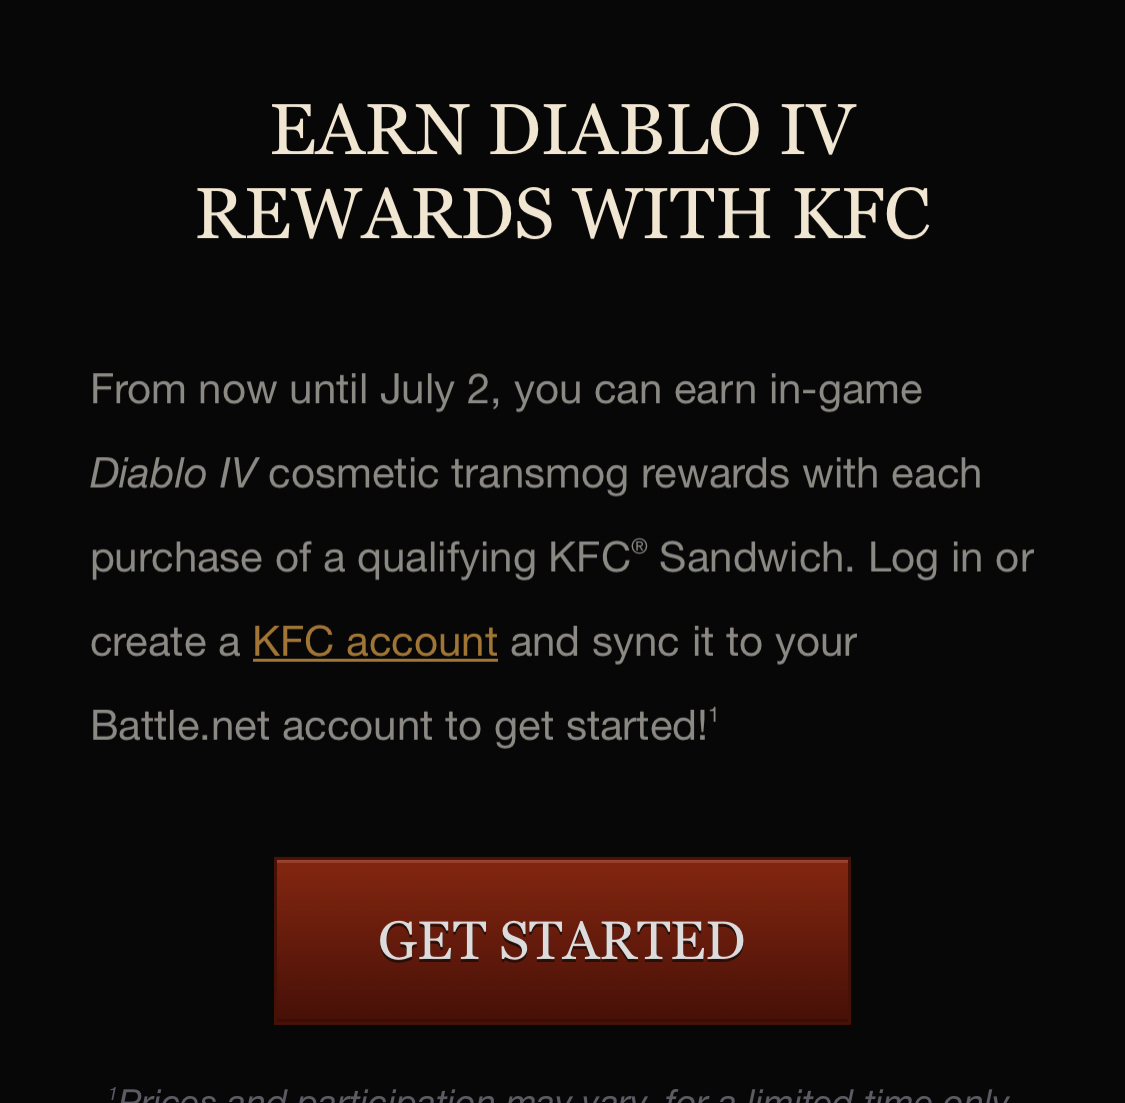 Notice depicting Diablo IV and KFC tie-in